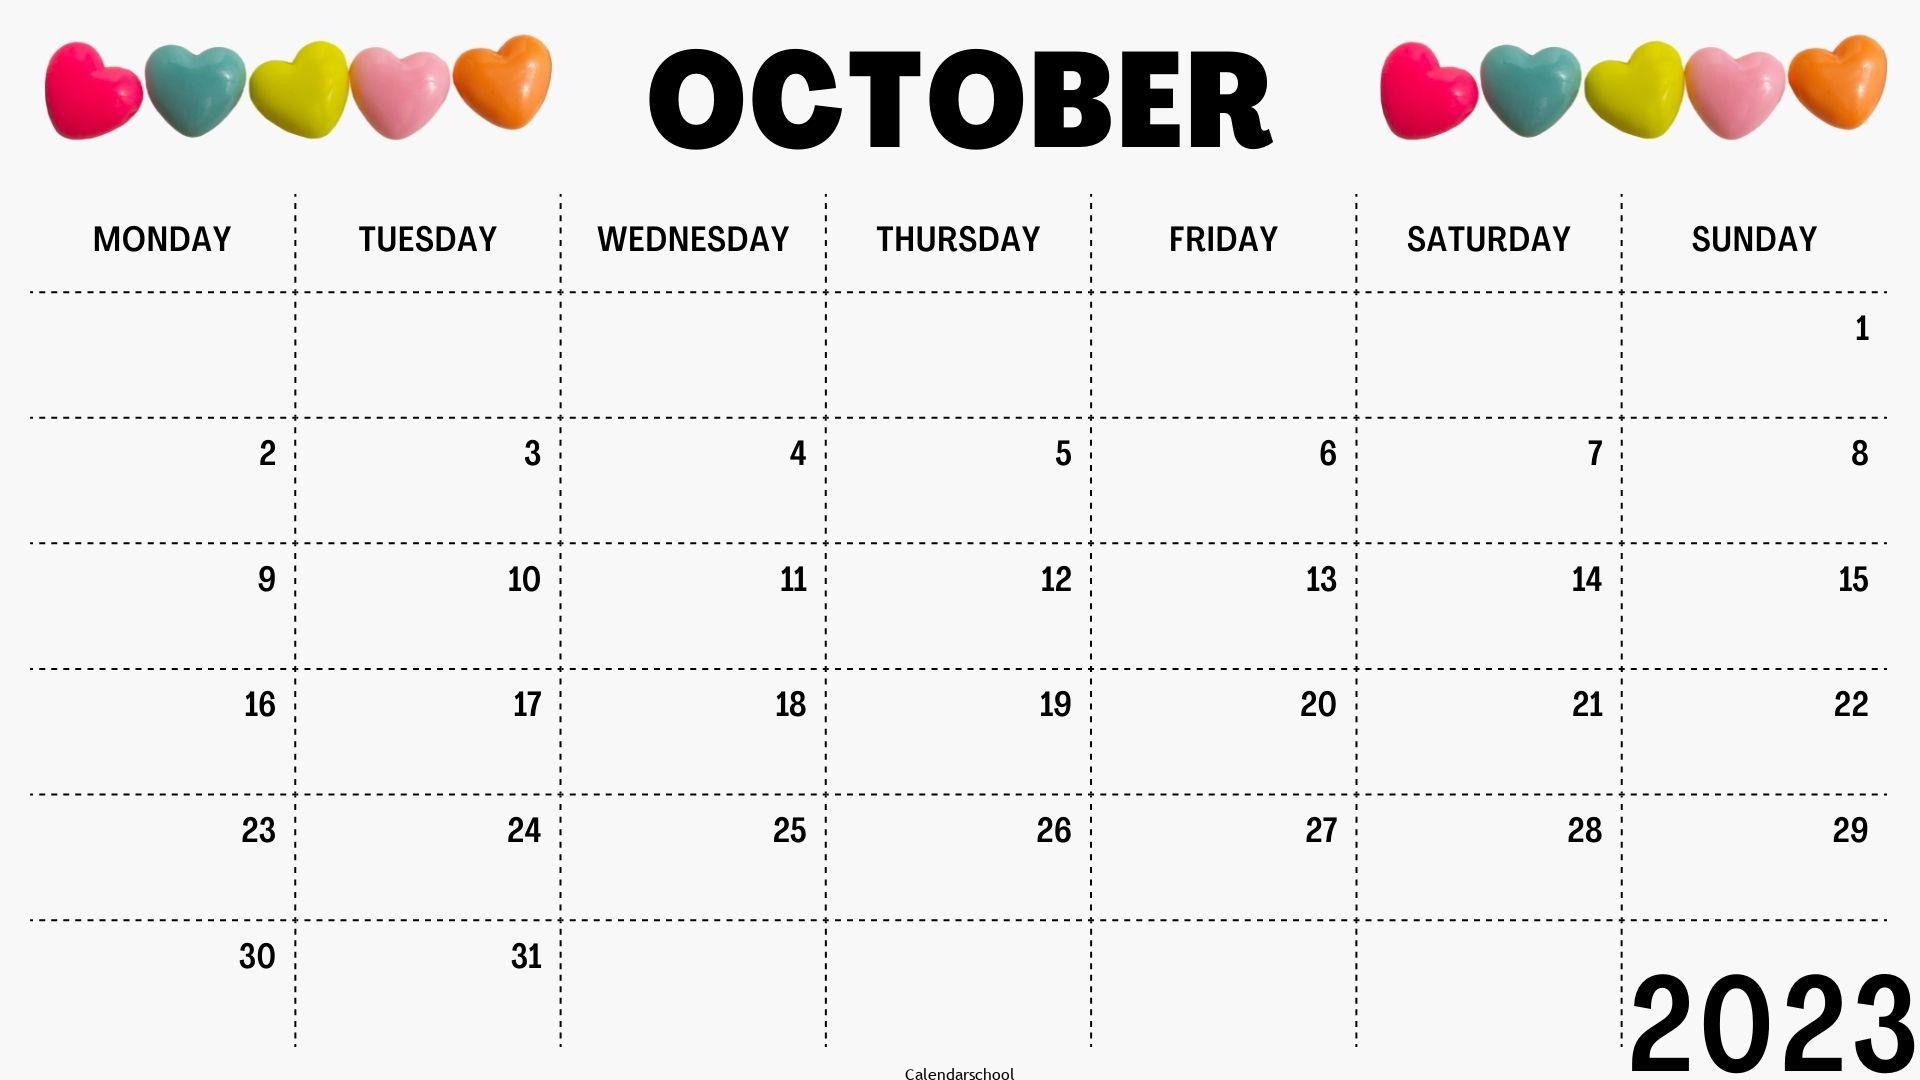 October 2023 Monthly Blank Calendar